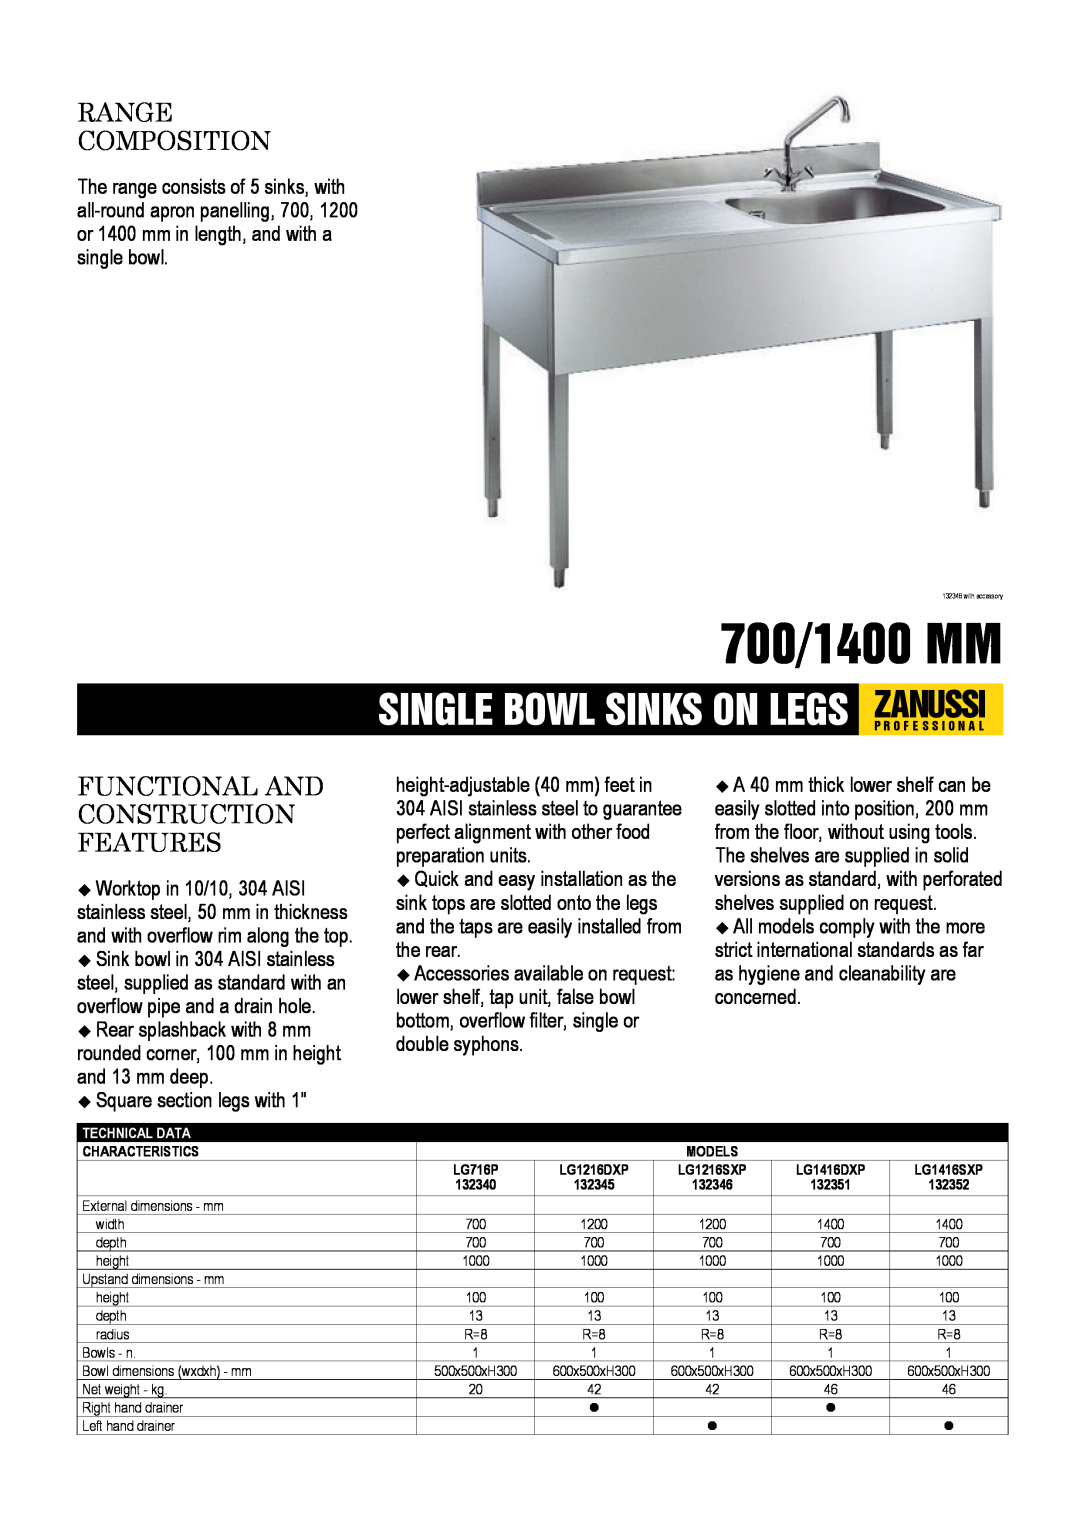 Electrolux LG716P dimensions 700/1400 MM, Single Bowl Sinks On Legs Zanussip R O F E S S I O N A L, Range Composition 